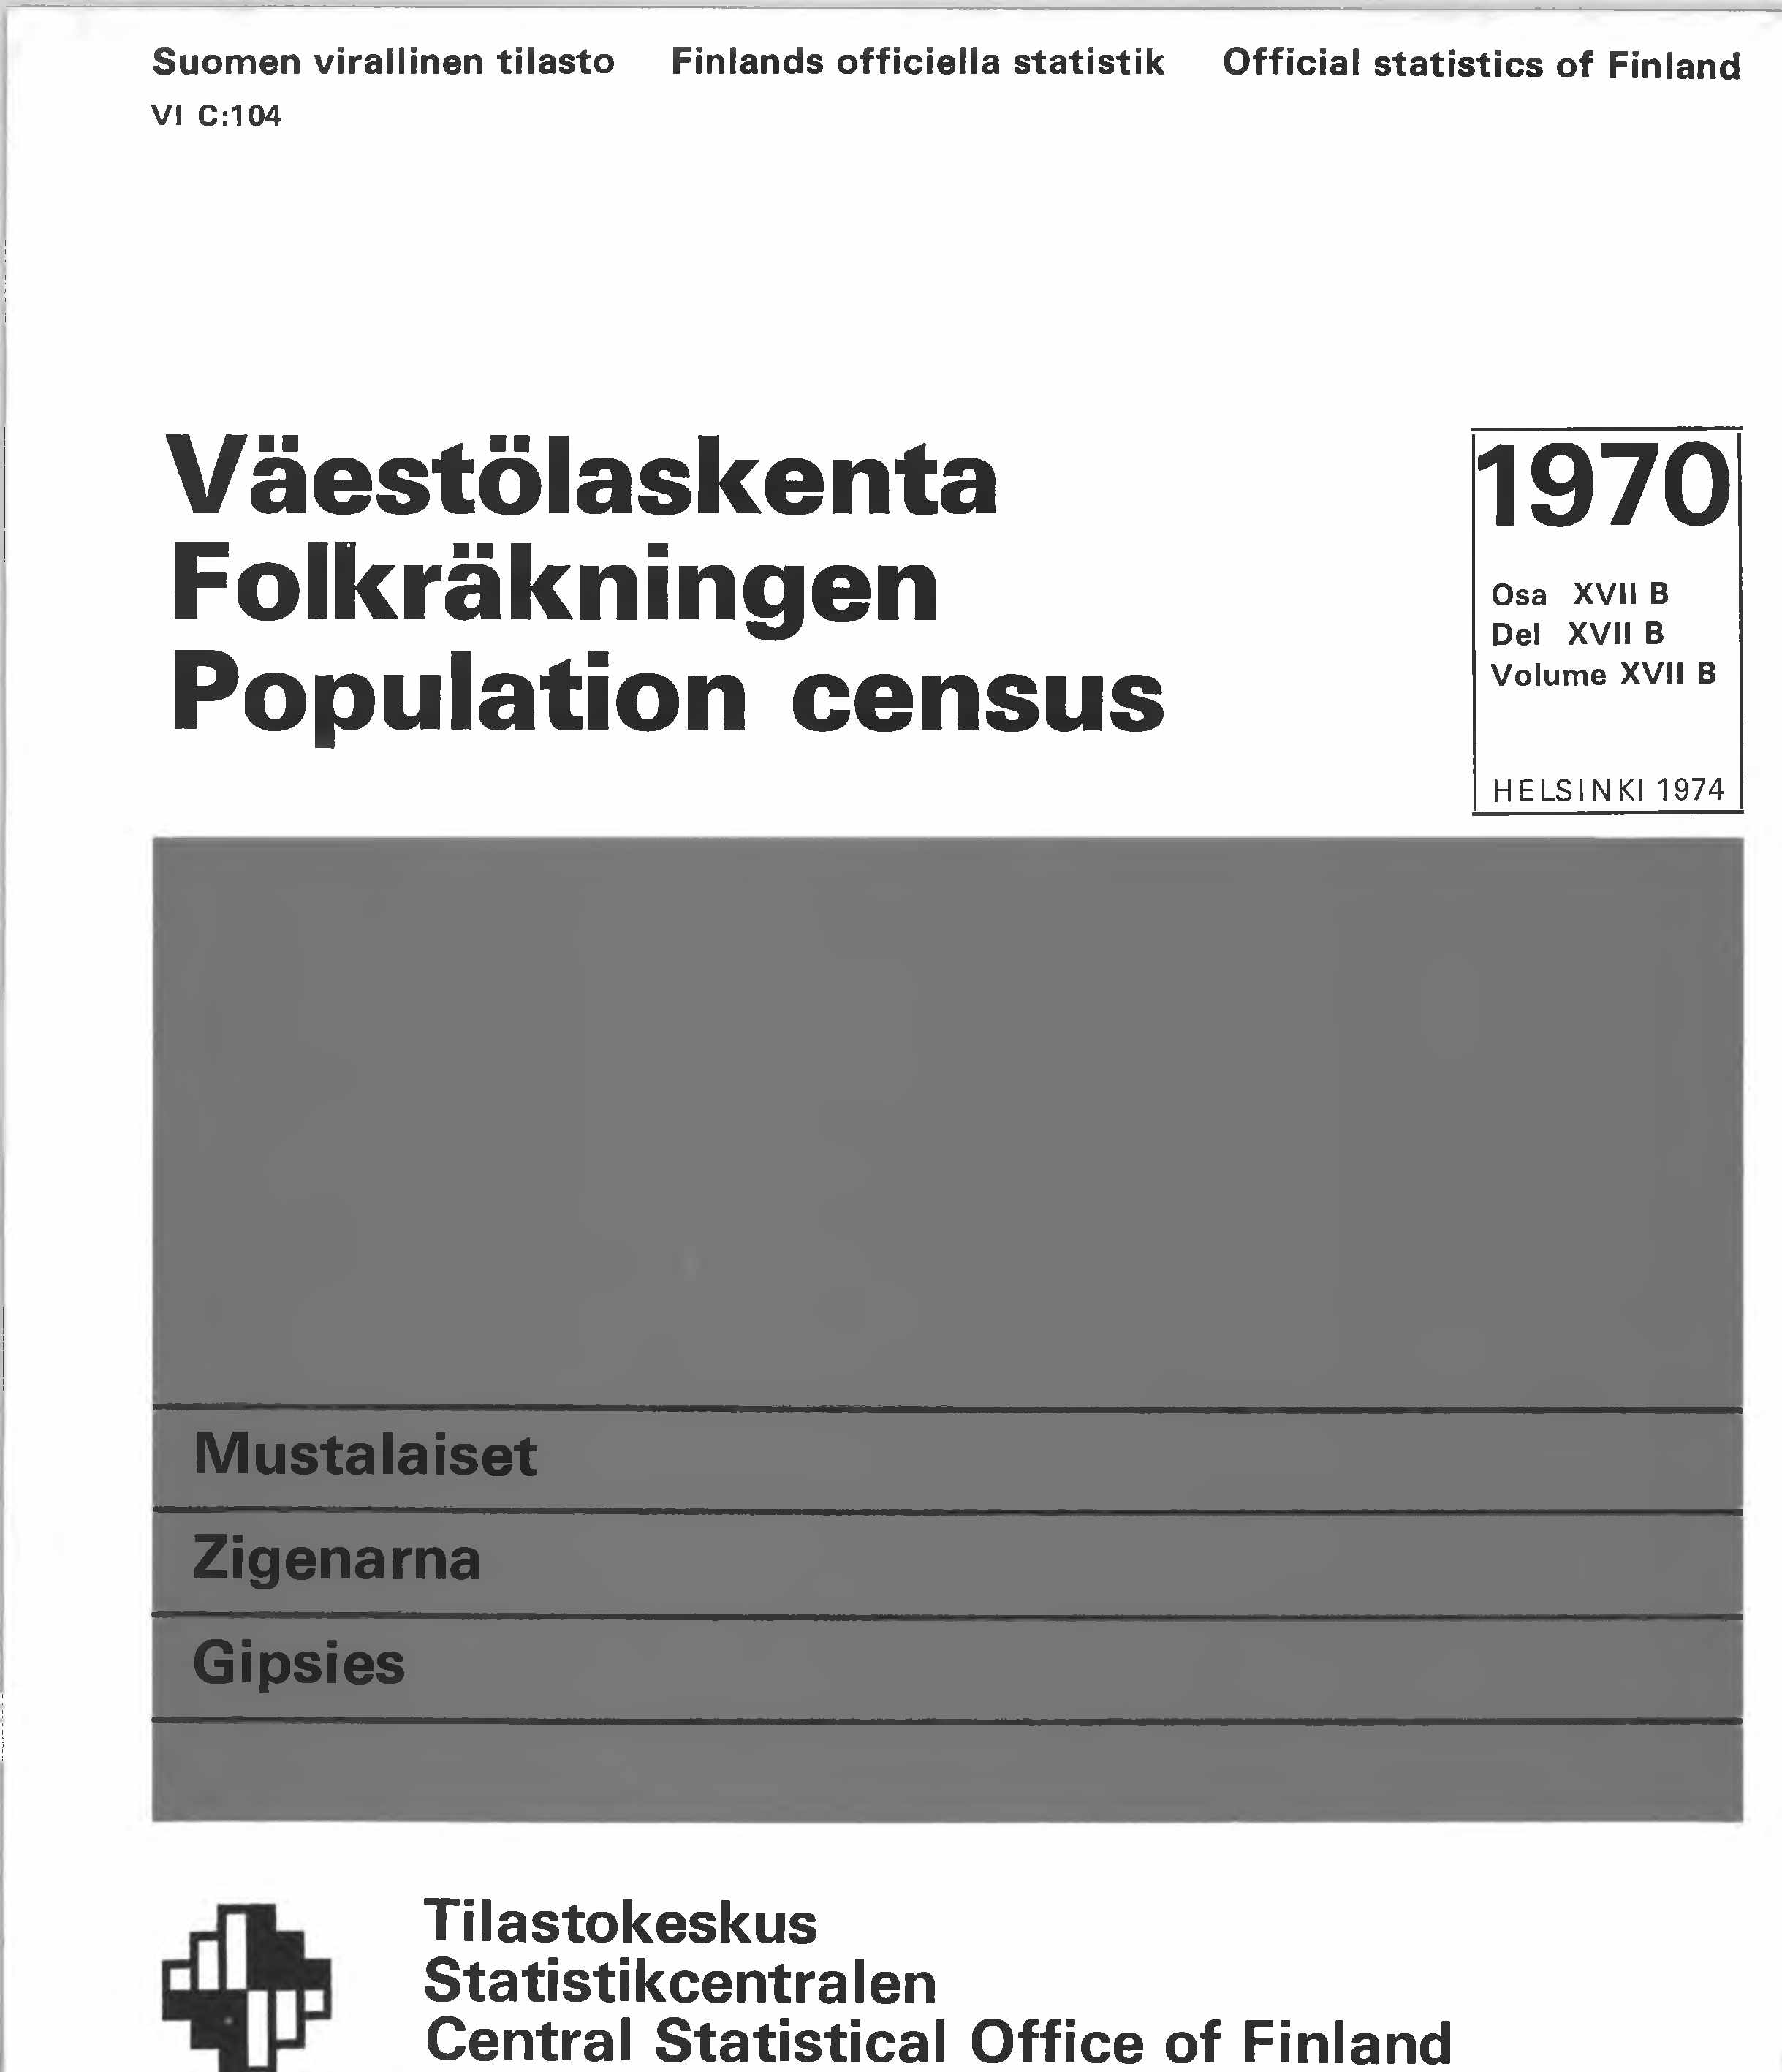 Tilastokeskus Statistikcentralen Central Statistical Office of Finland Suomen virallinen tilasto Finlands officiella statistik O fficial statistics